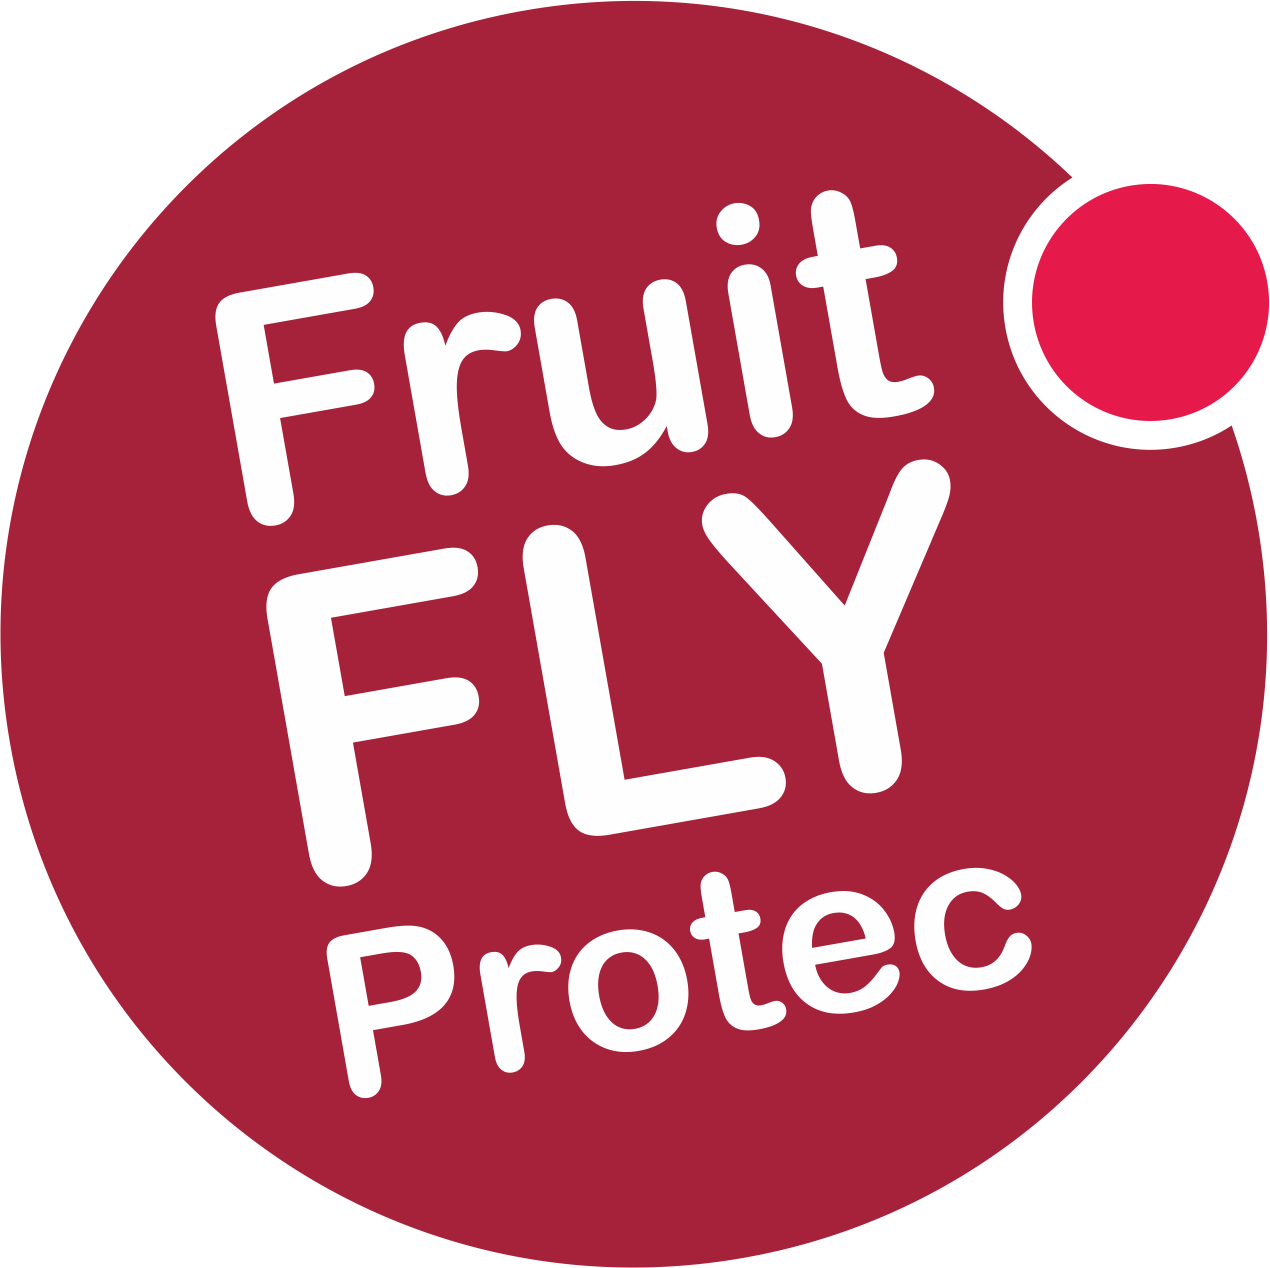 FruitFly protect 9 1